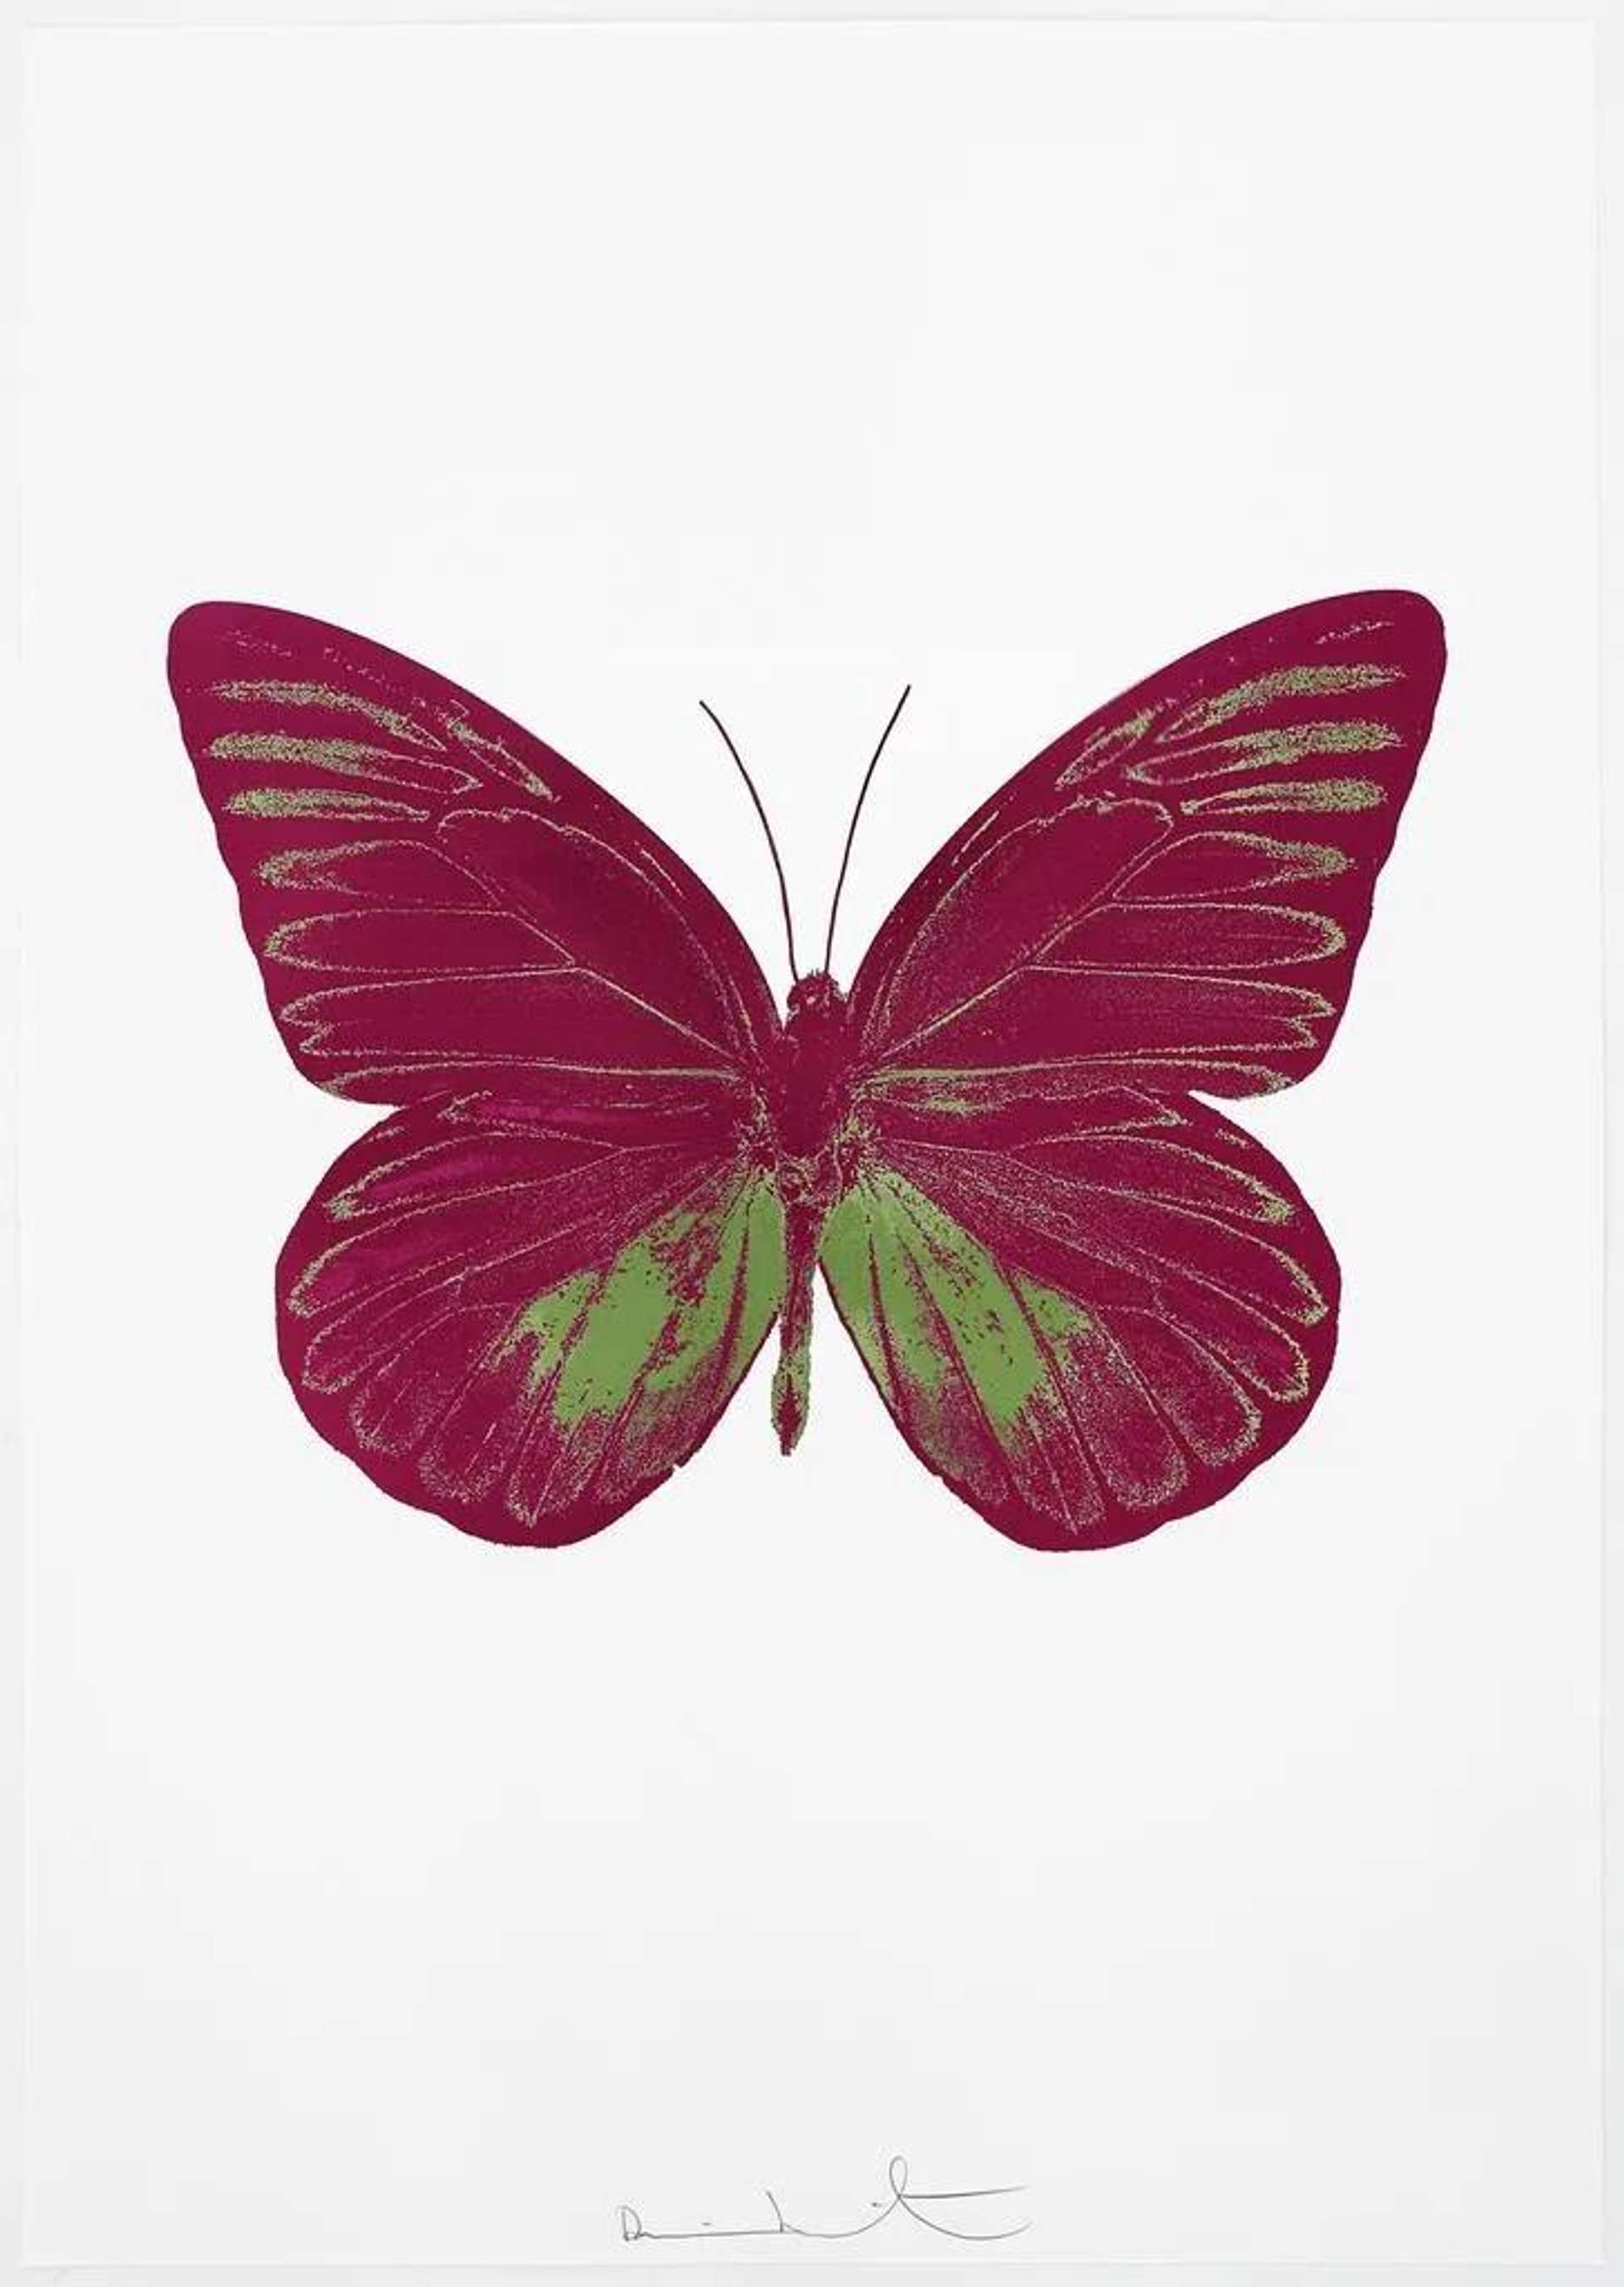 The Souls I (fuchsia pink, leaf green) - Signed Print by Damien Hirst 2010 - MyArtBroker